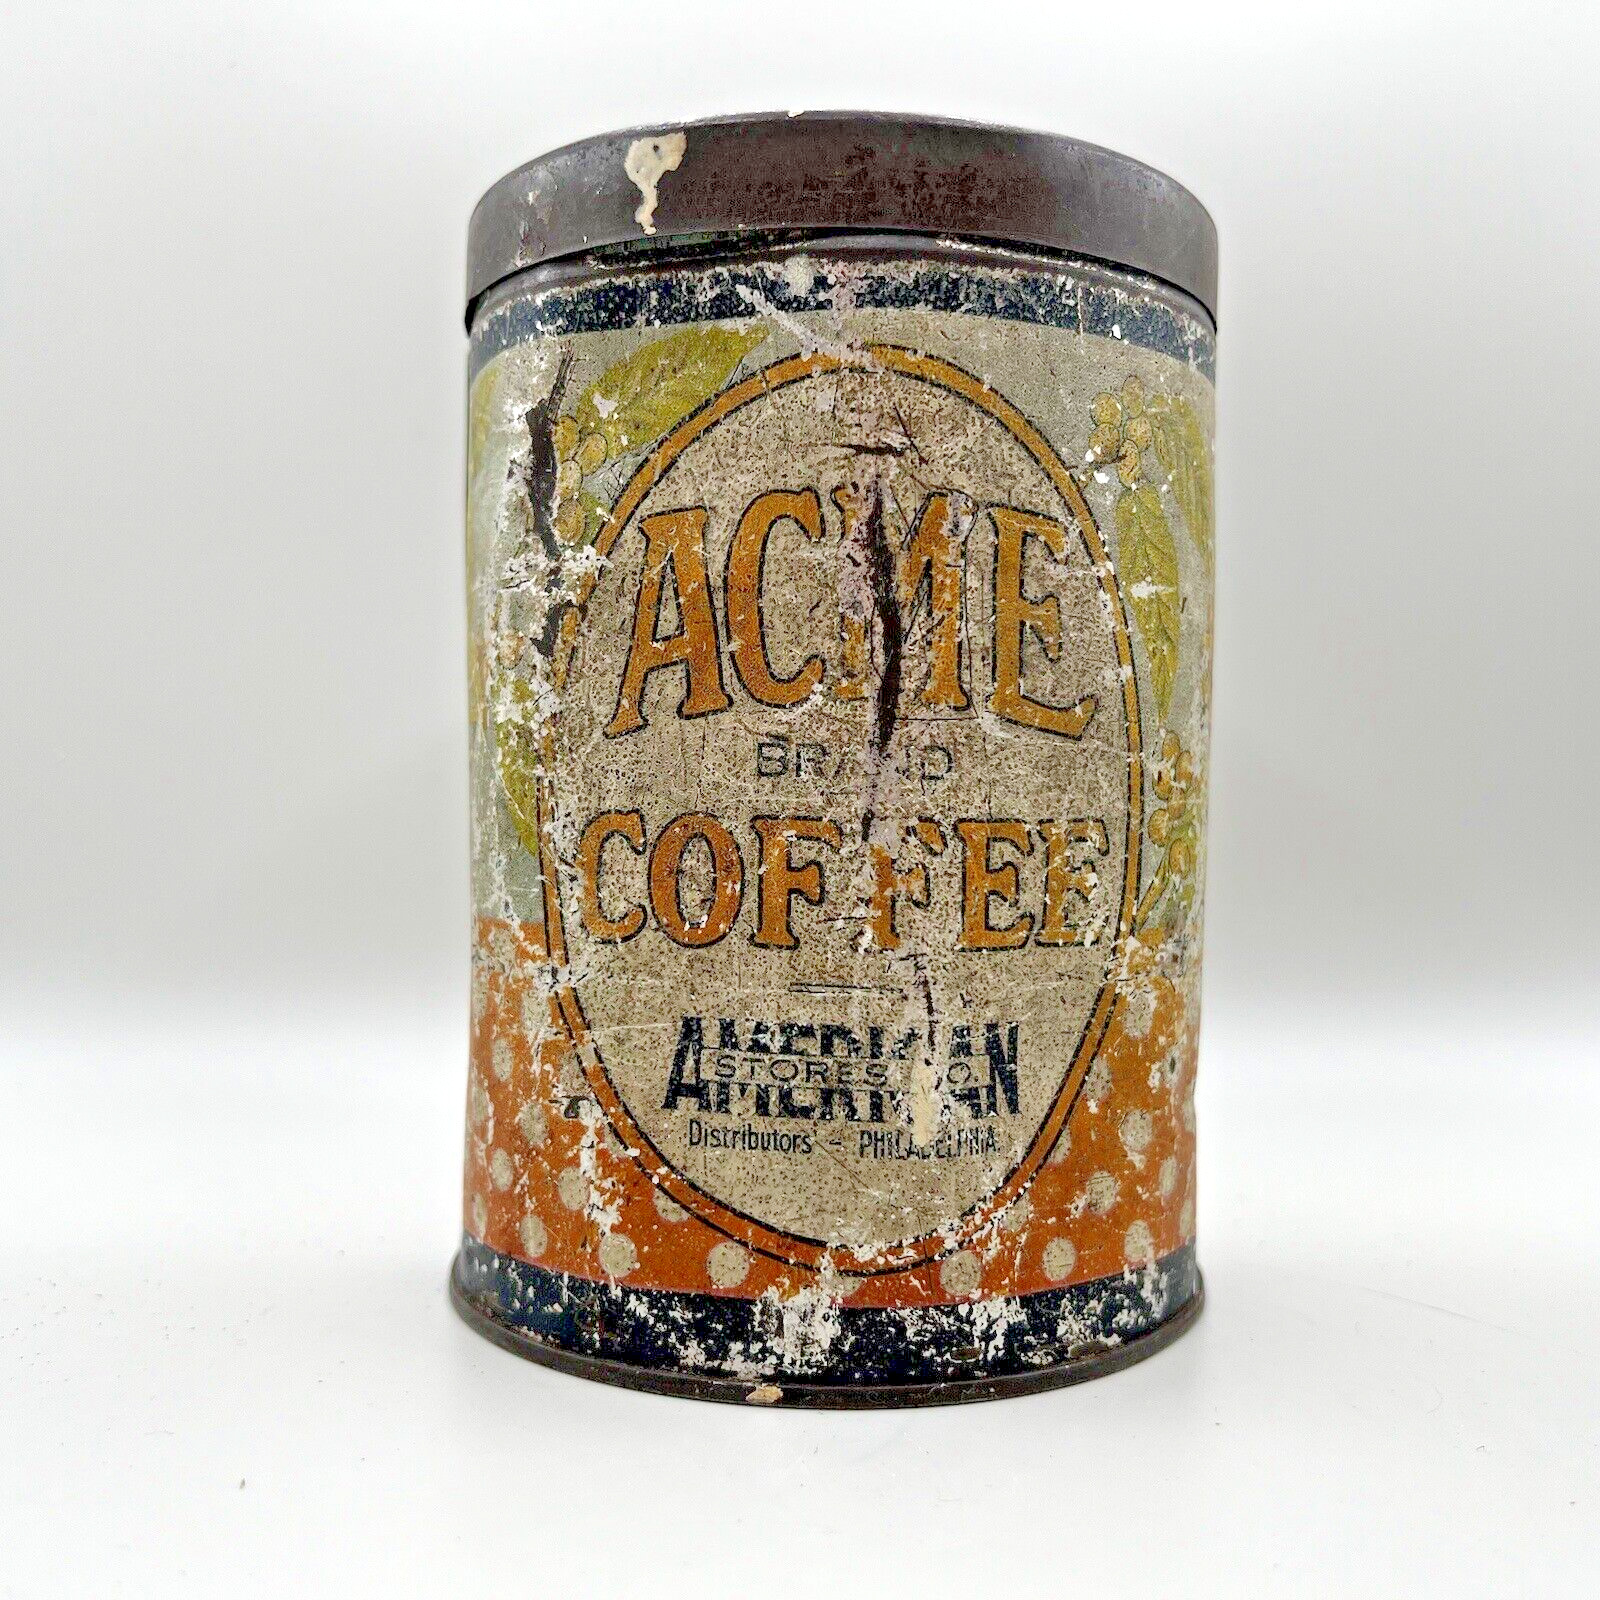 Vintage ACME BRAND COFFEE Advertising Tin w/LID American Stores Co. Philadelphia